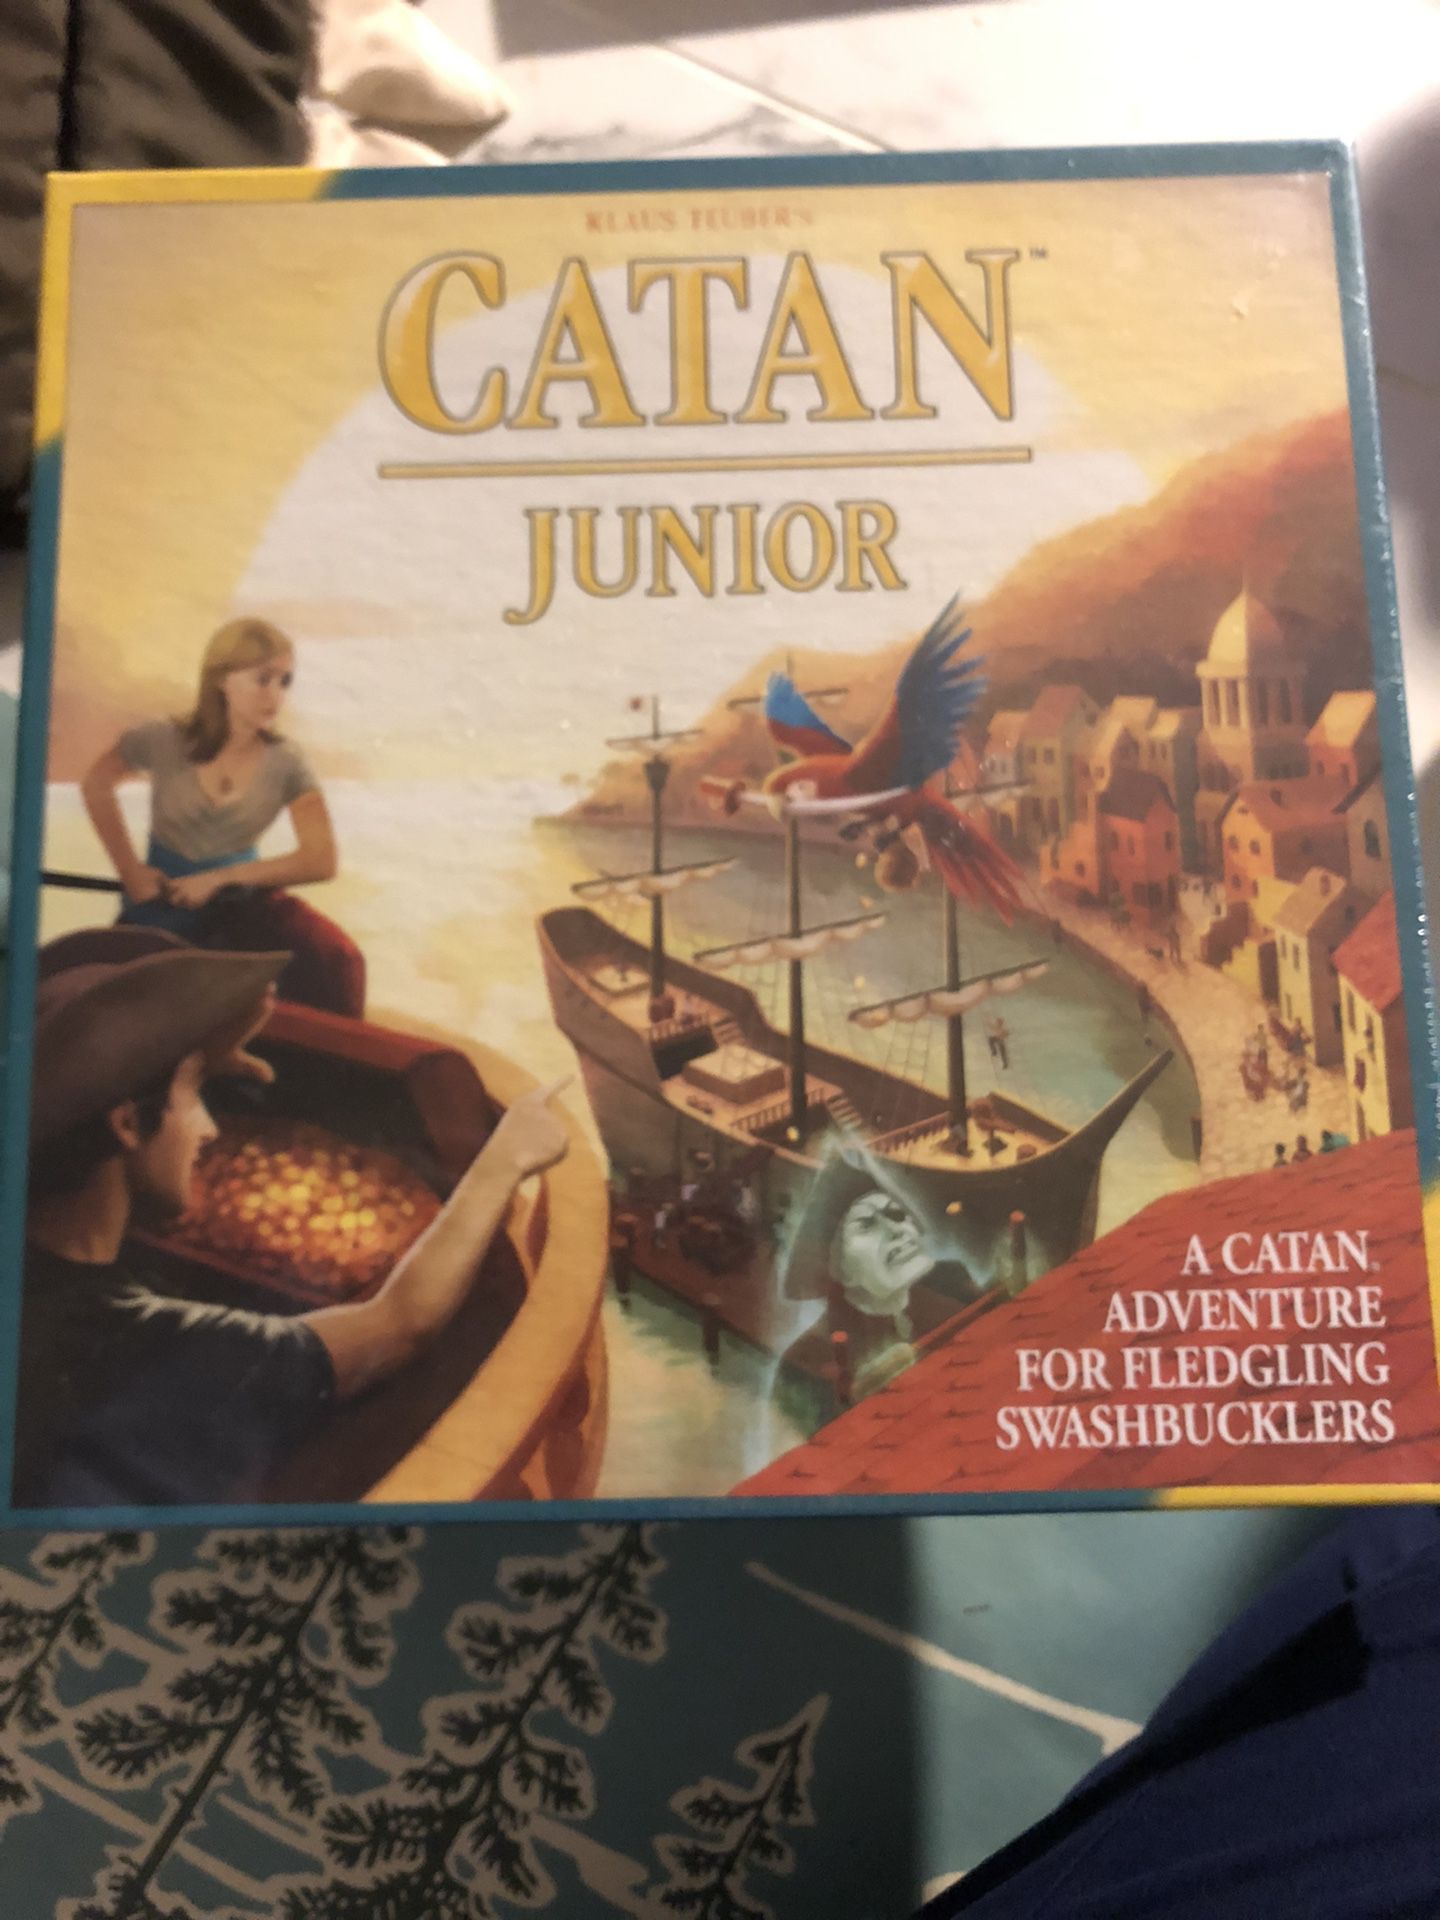 Catan Junior Board Game